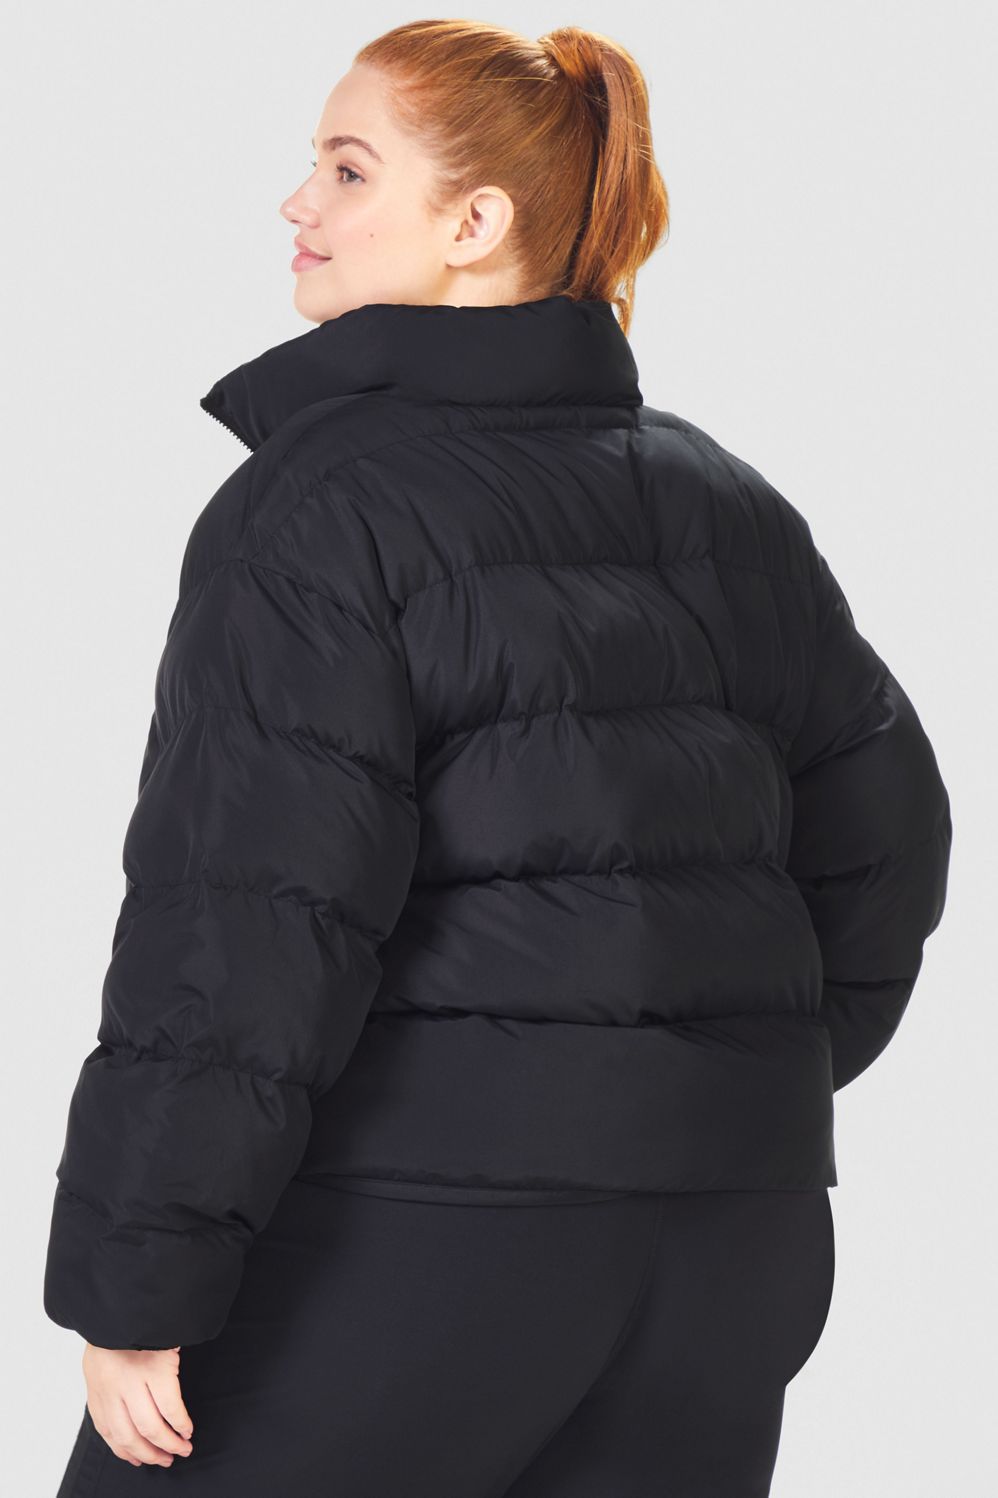 Fabletics Wander Puffer Jacket Black - $100 (16% Off Retail